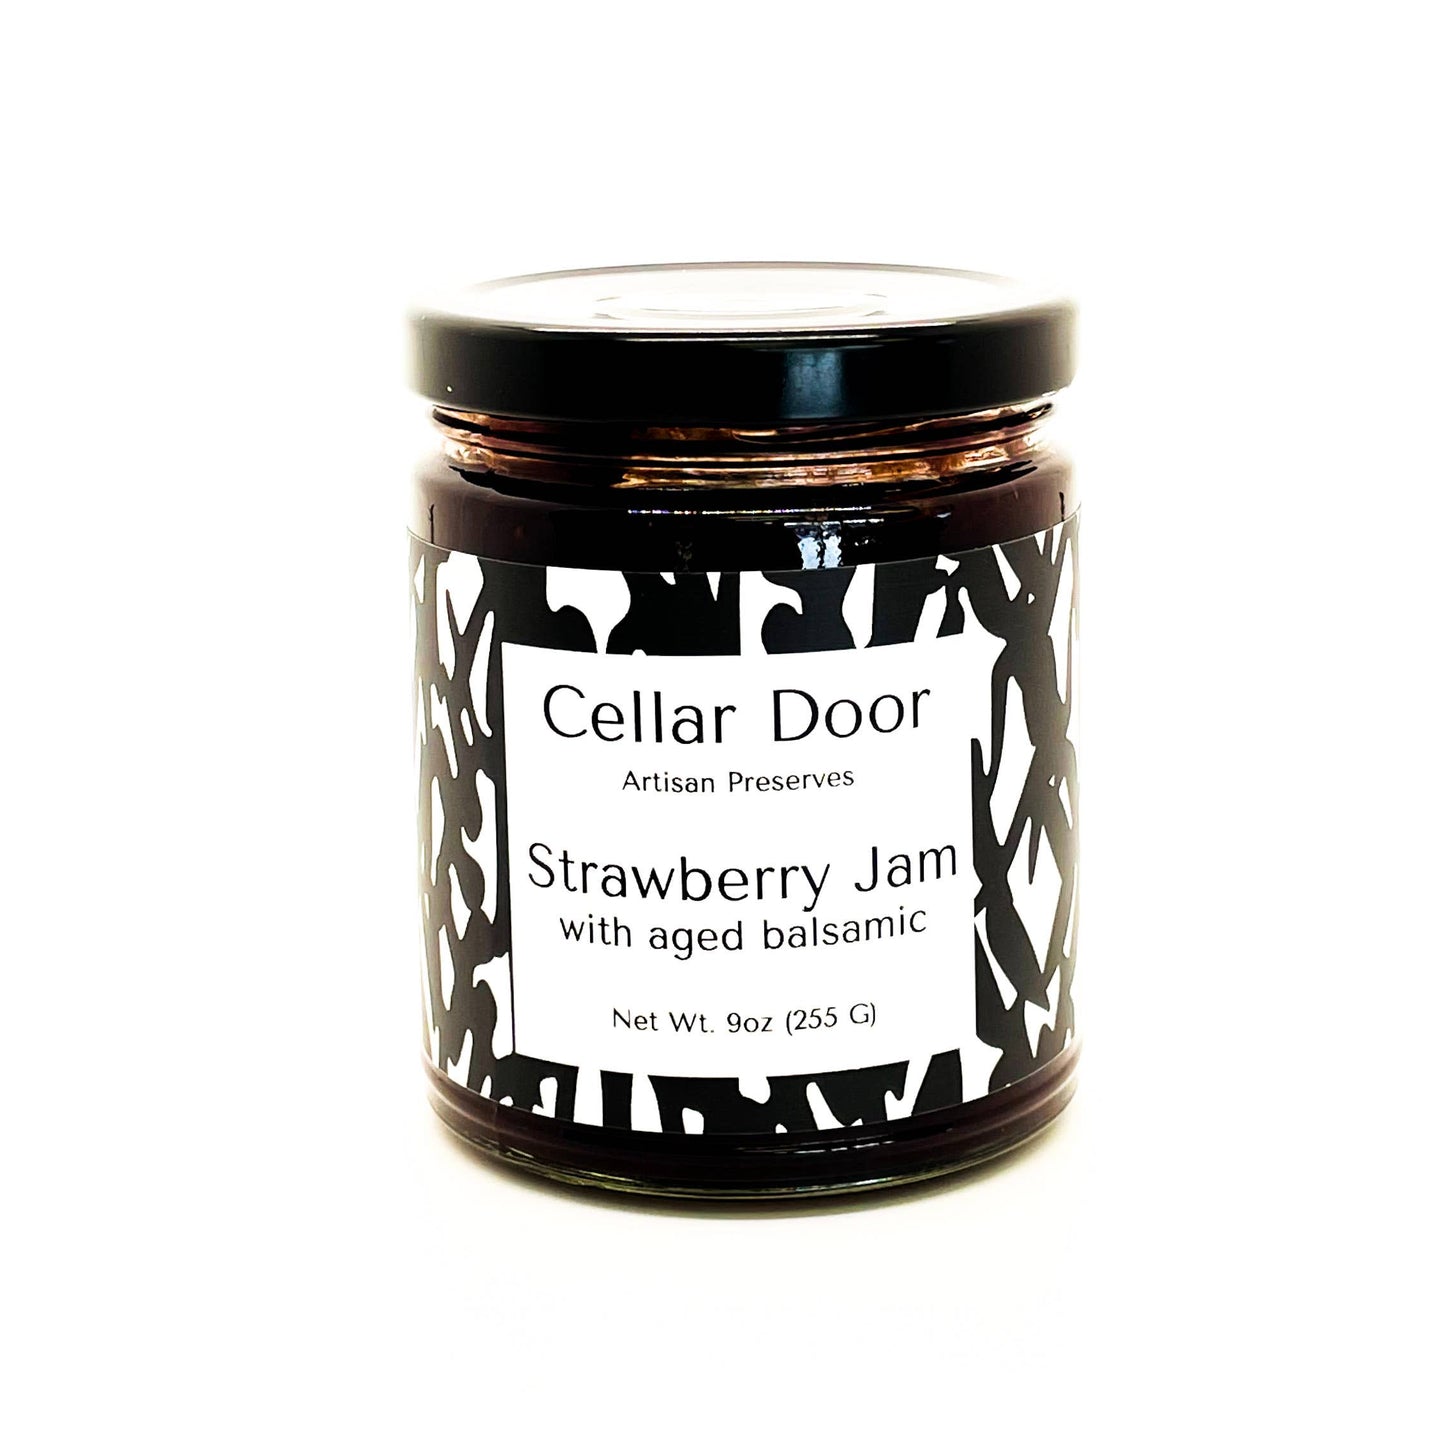 Cellar Door Strawberry Jam with Aged Balsamic, 255g/9oz